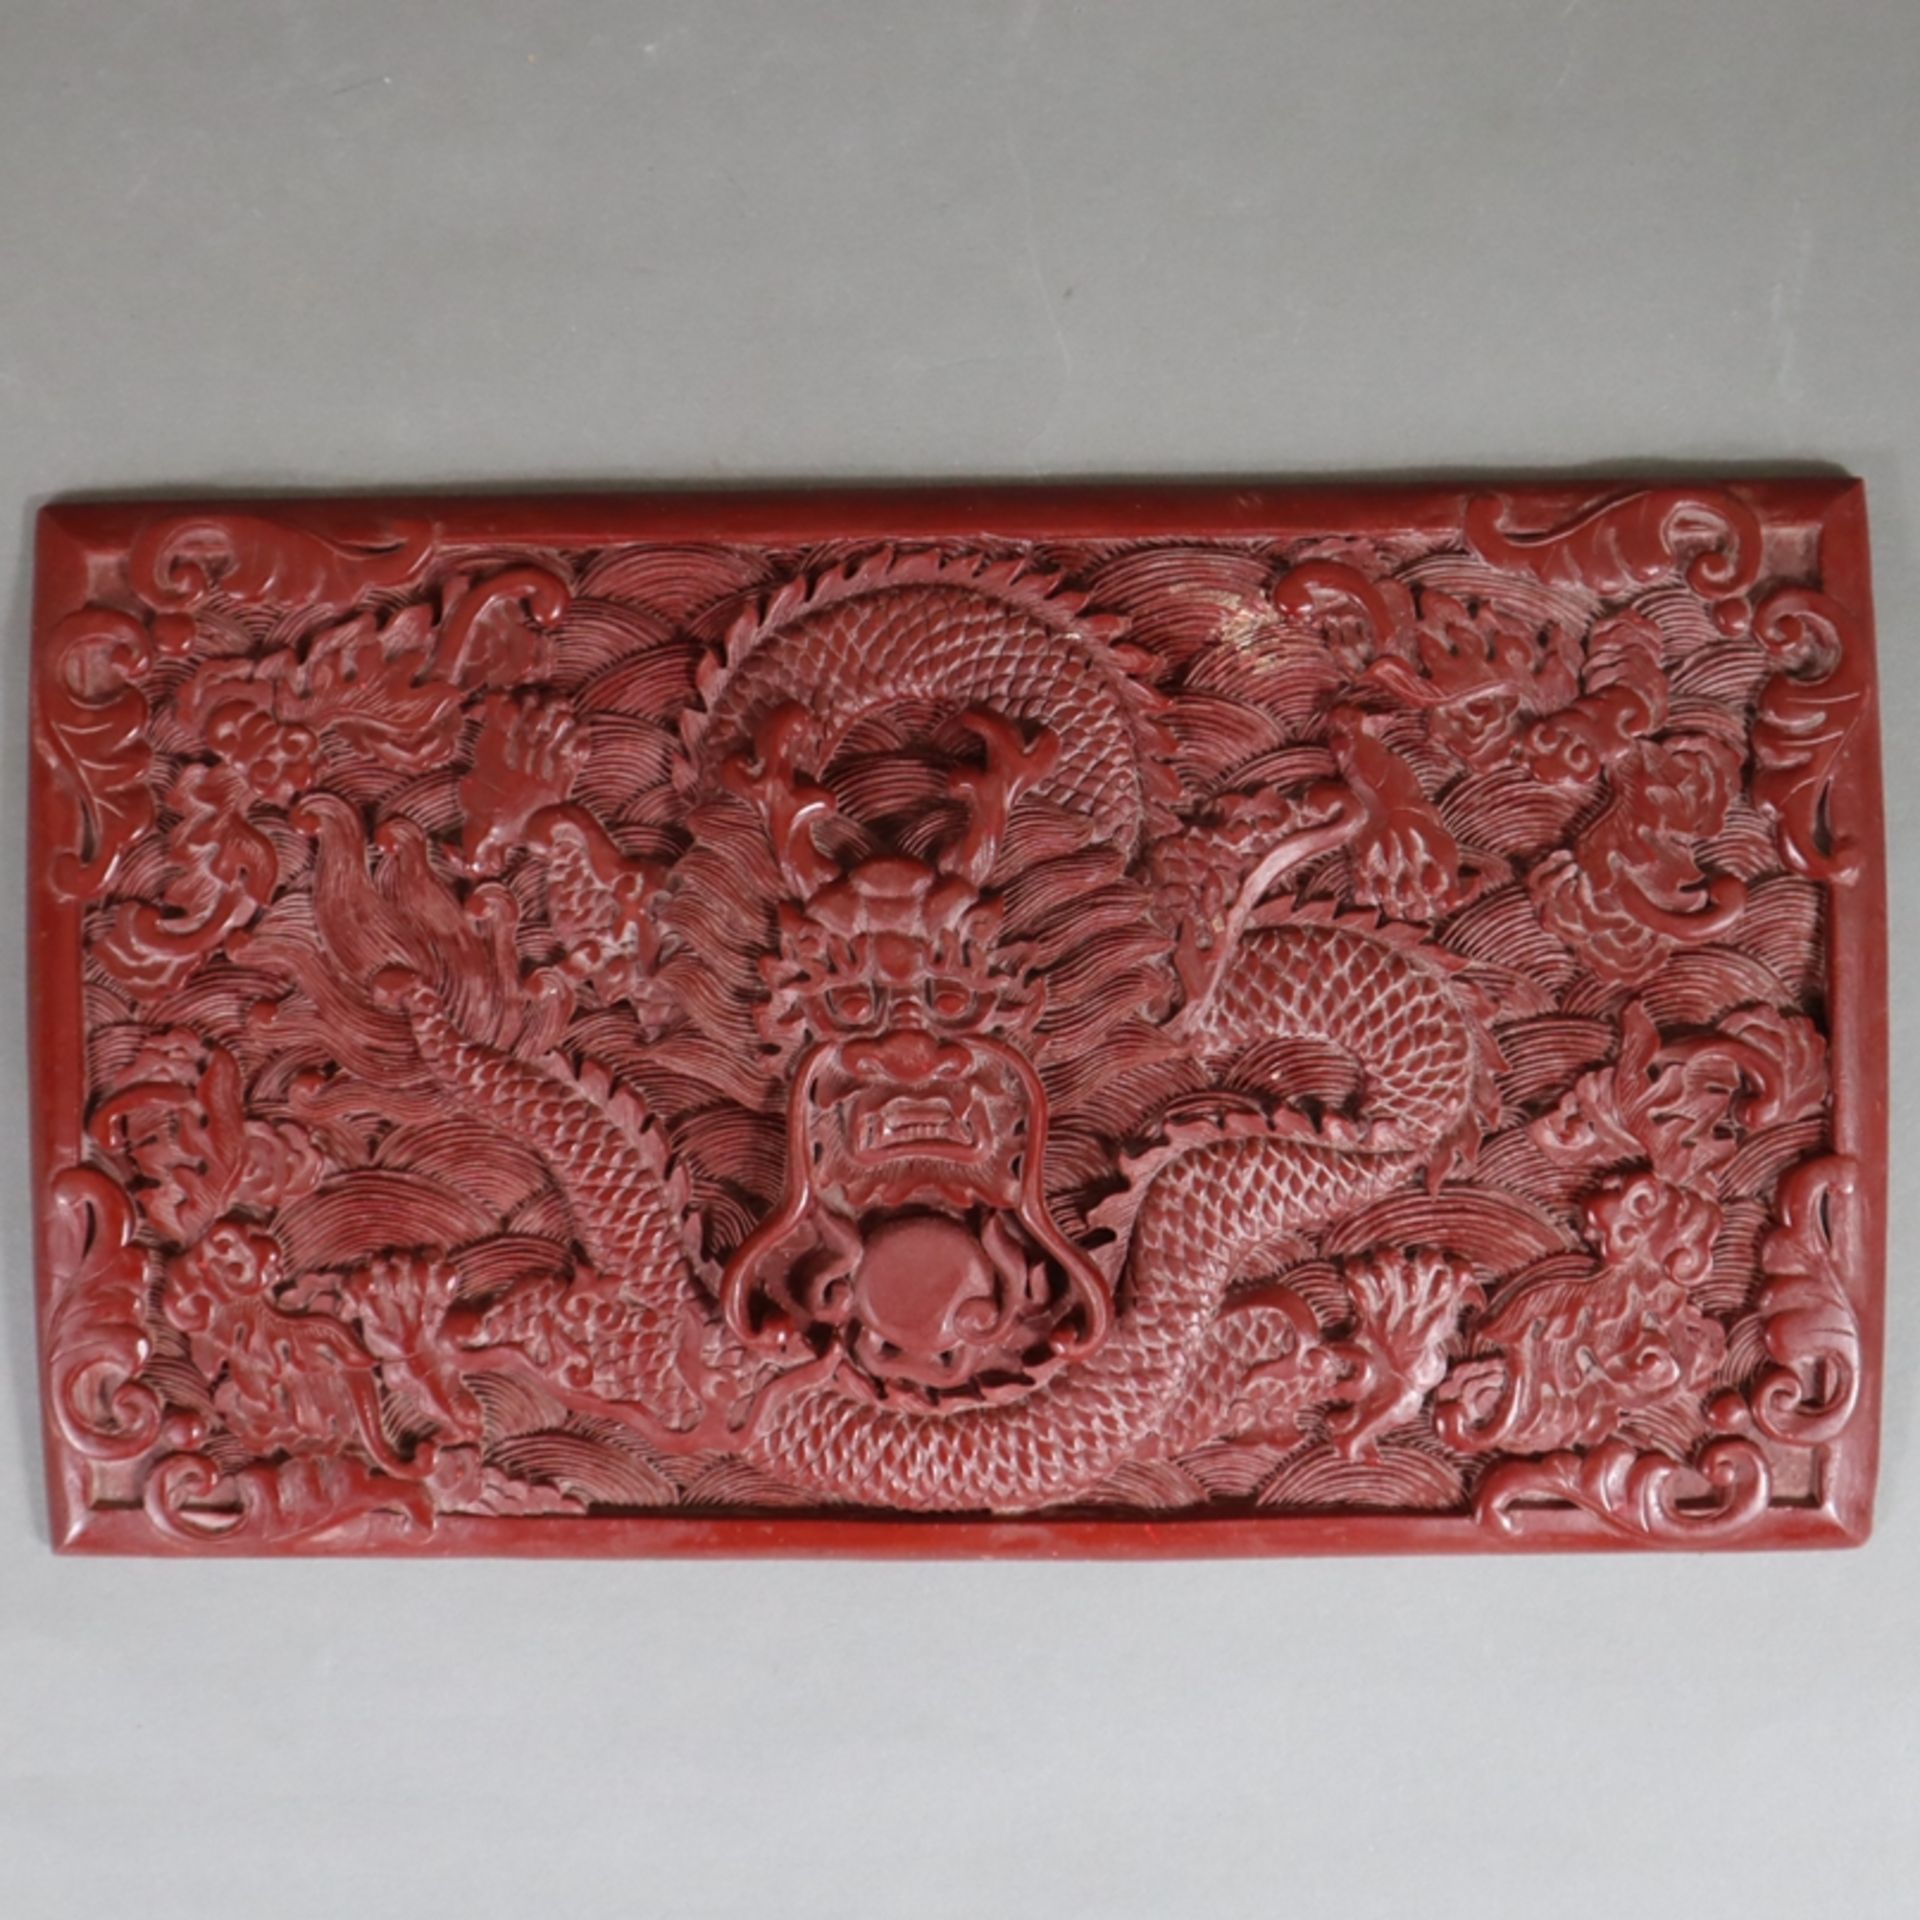 Große Lackplakette - China, roter Lack, rechteckig, in Reliefarbeit gewundener fünfklauiger Drache 